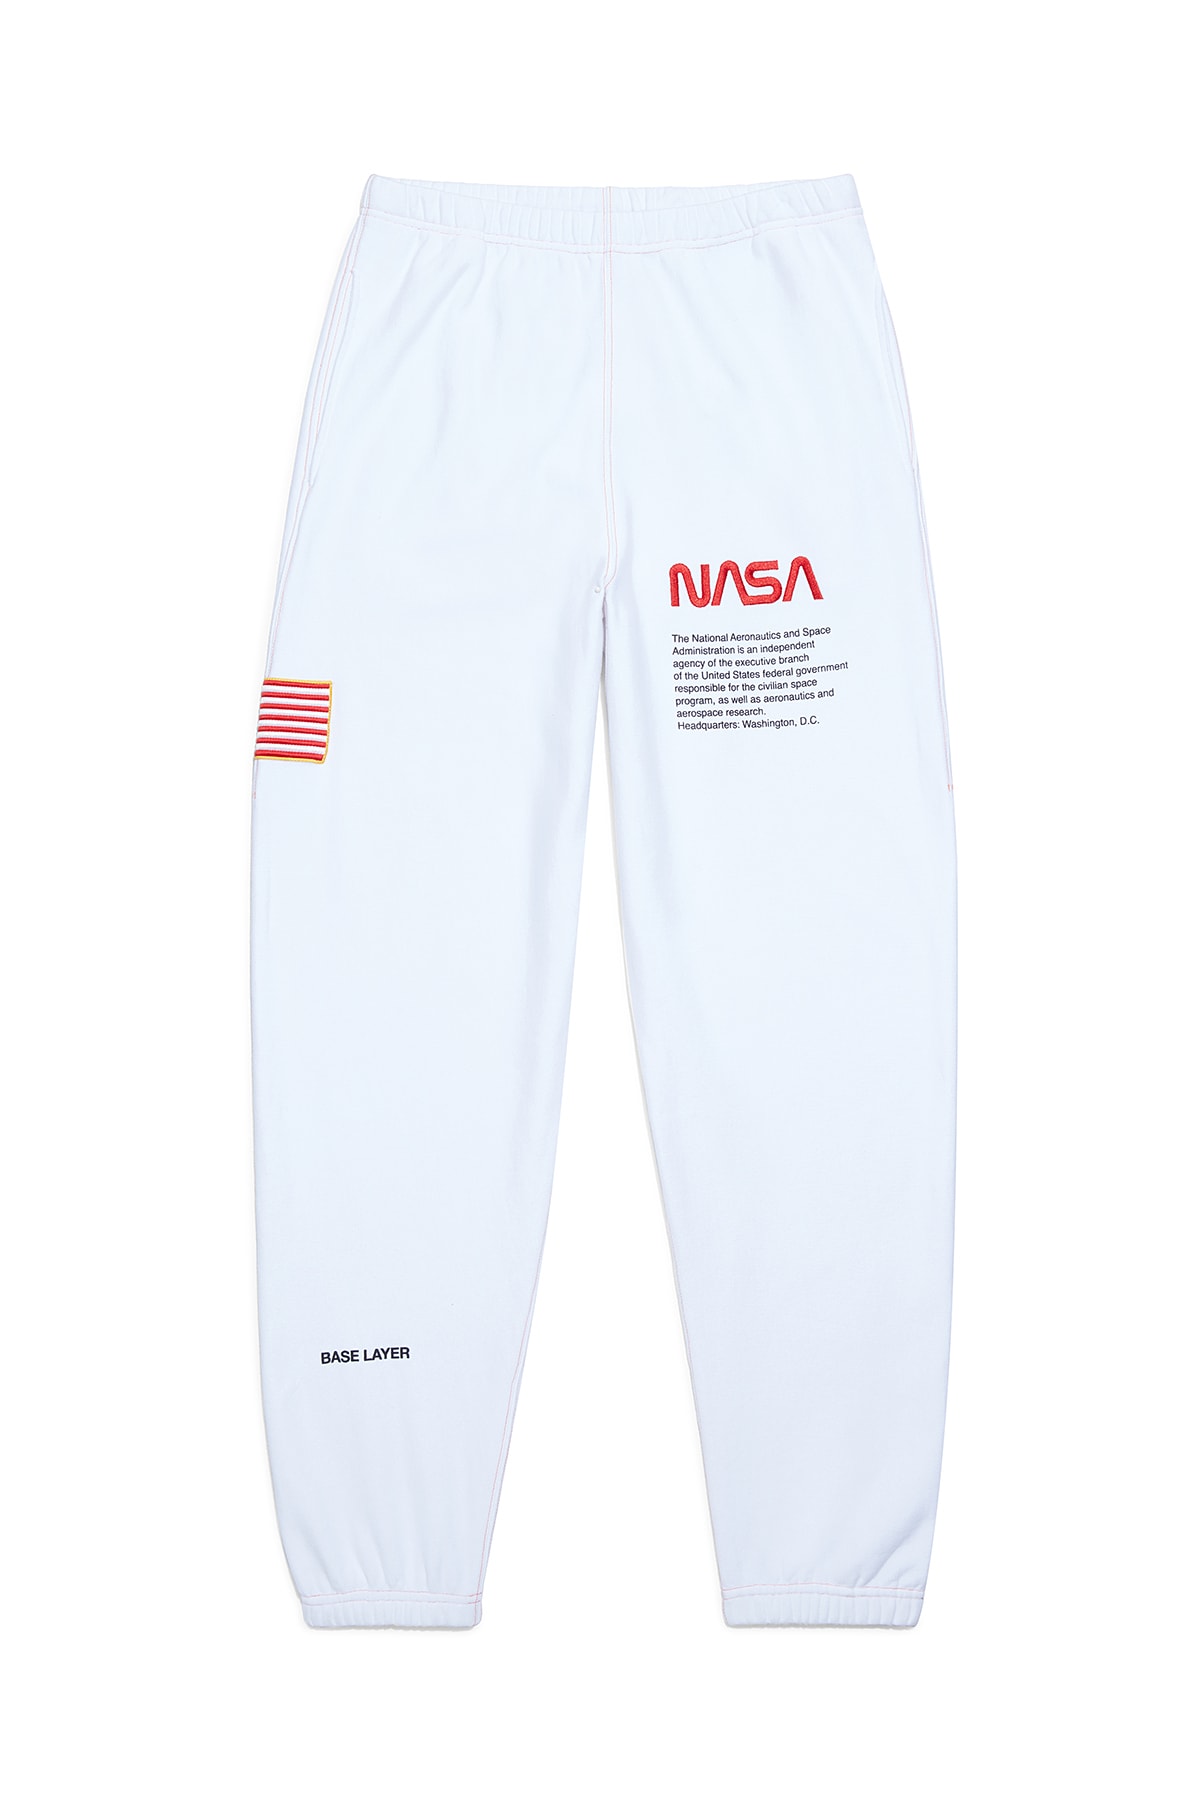 heron preston public figure fall winter 2018 collaboration nasa white logo branding flag american sweatpants